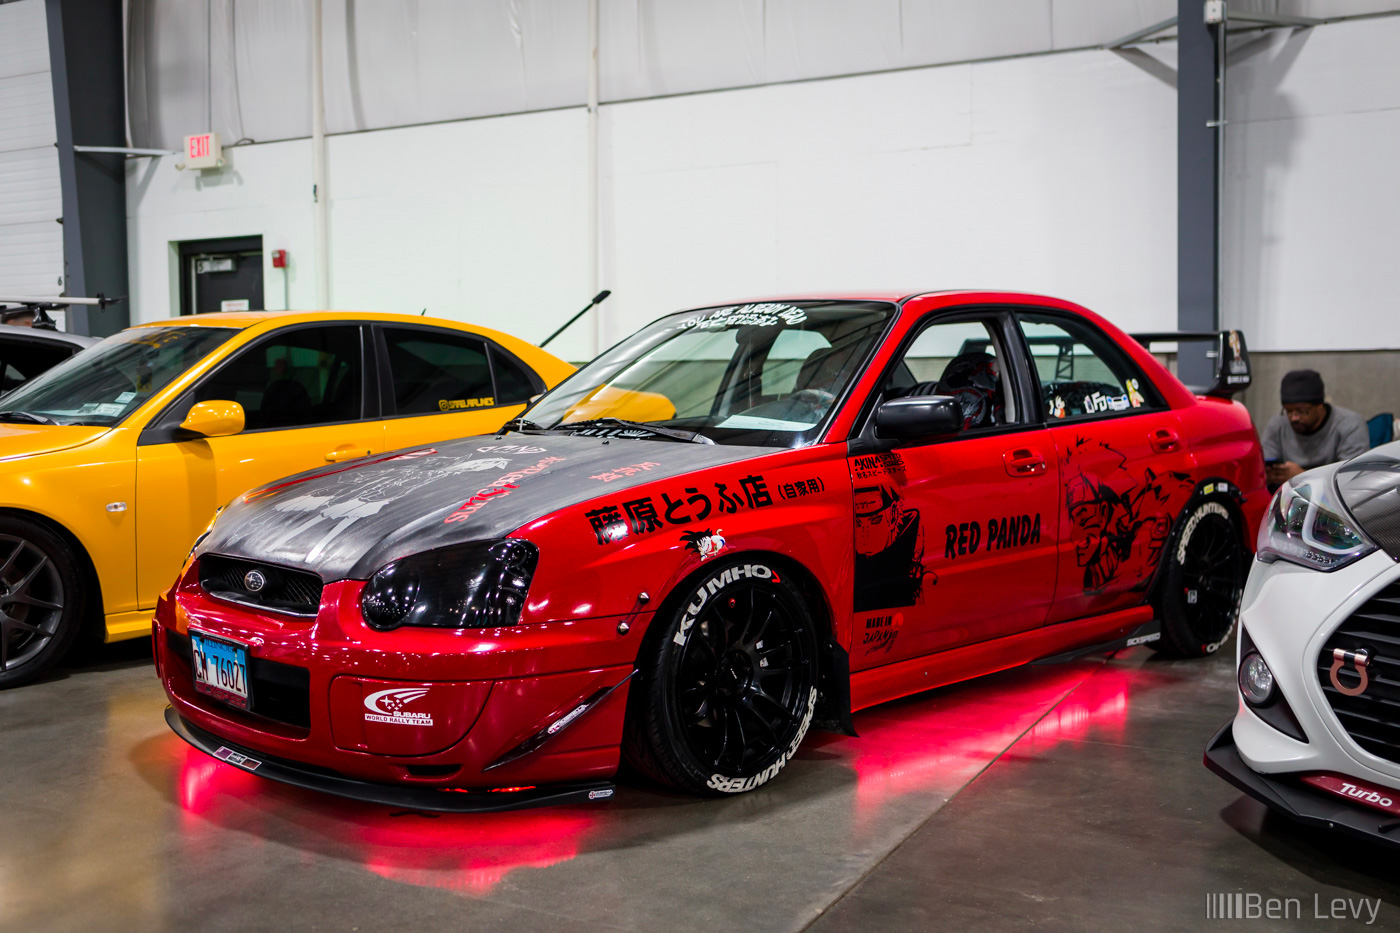 Red Subaru Impreza at Cars and Culture Car Show